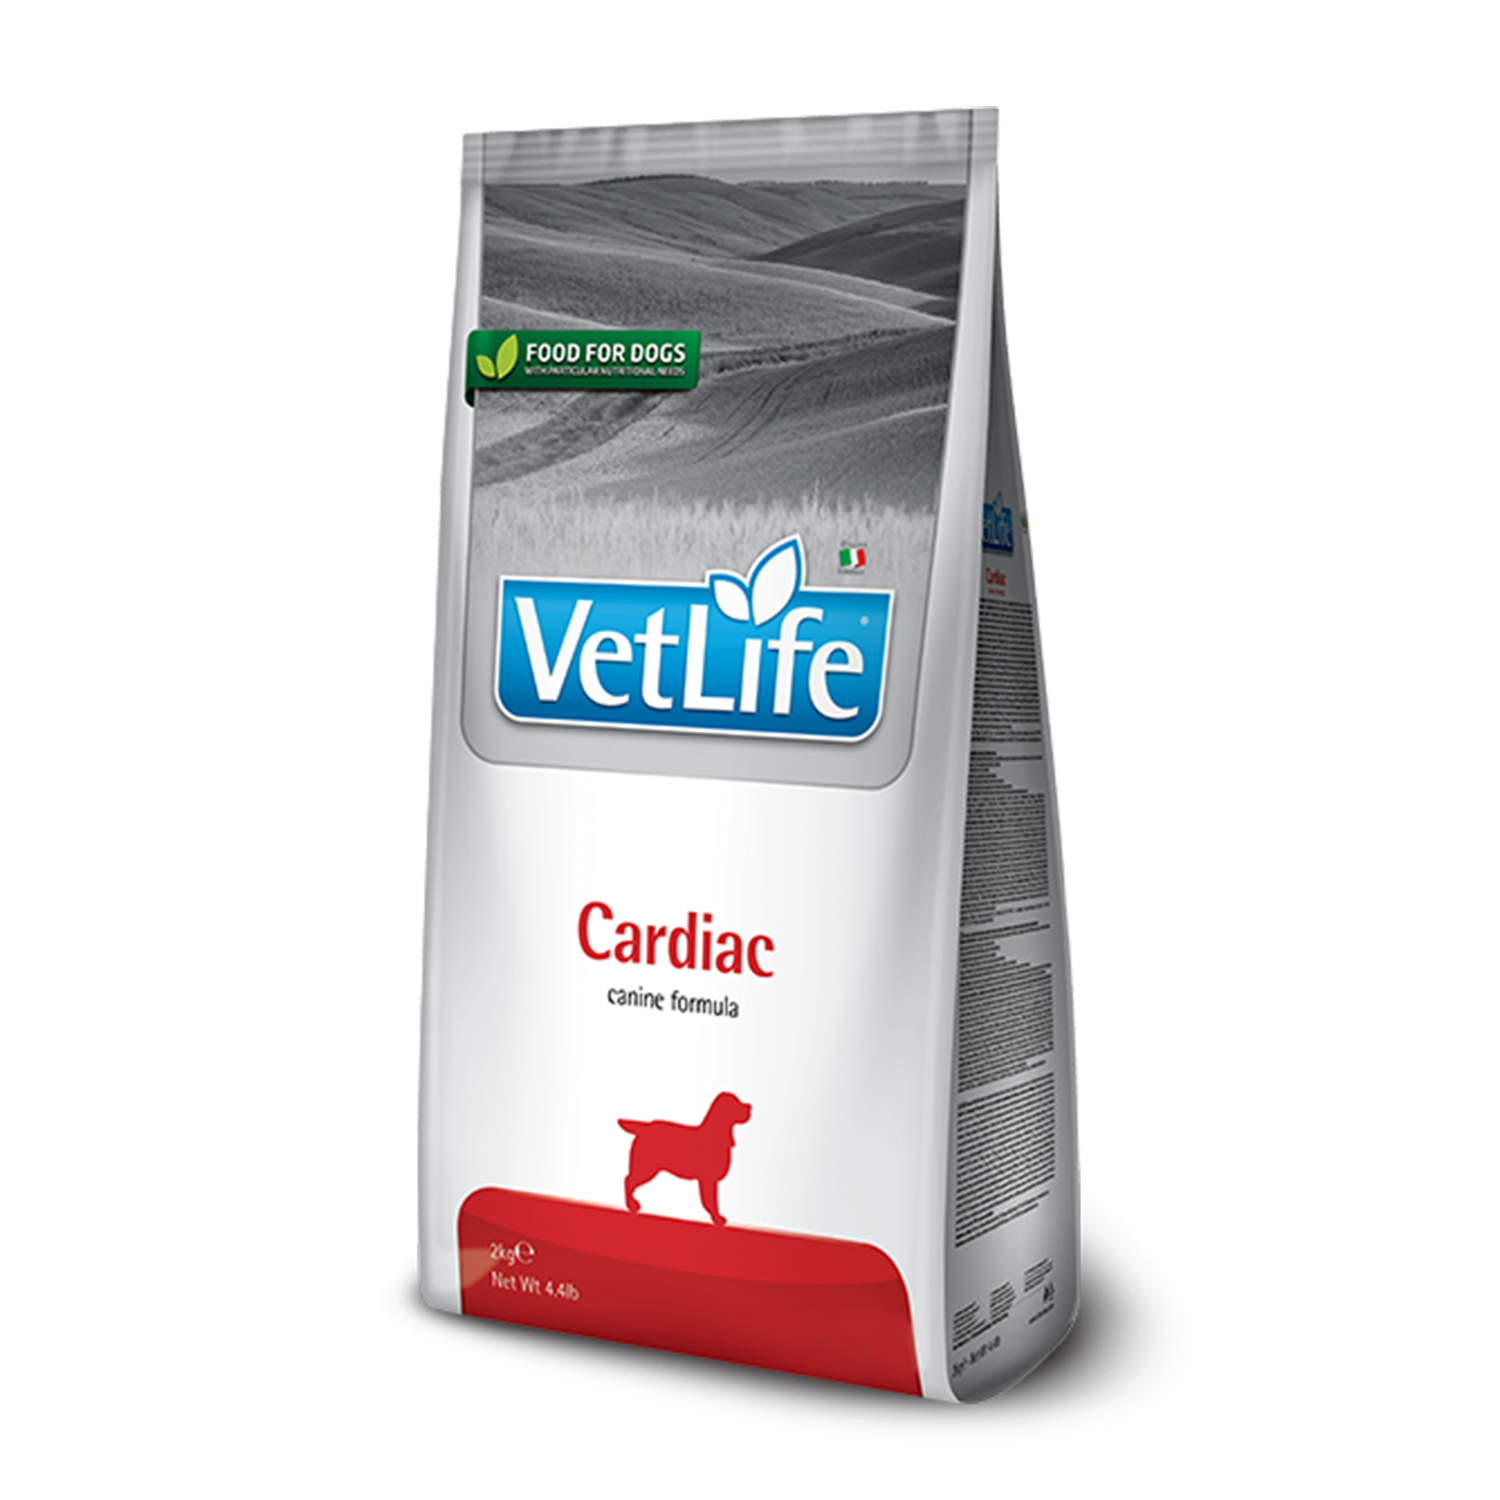 vetlife cardiac dog food